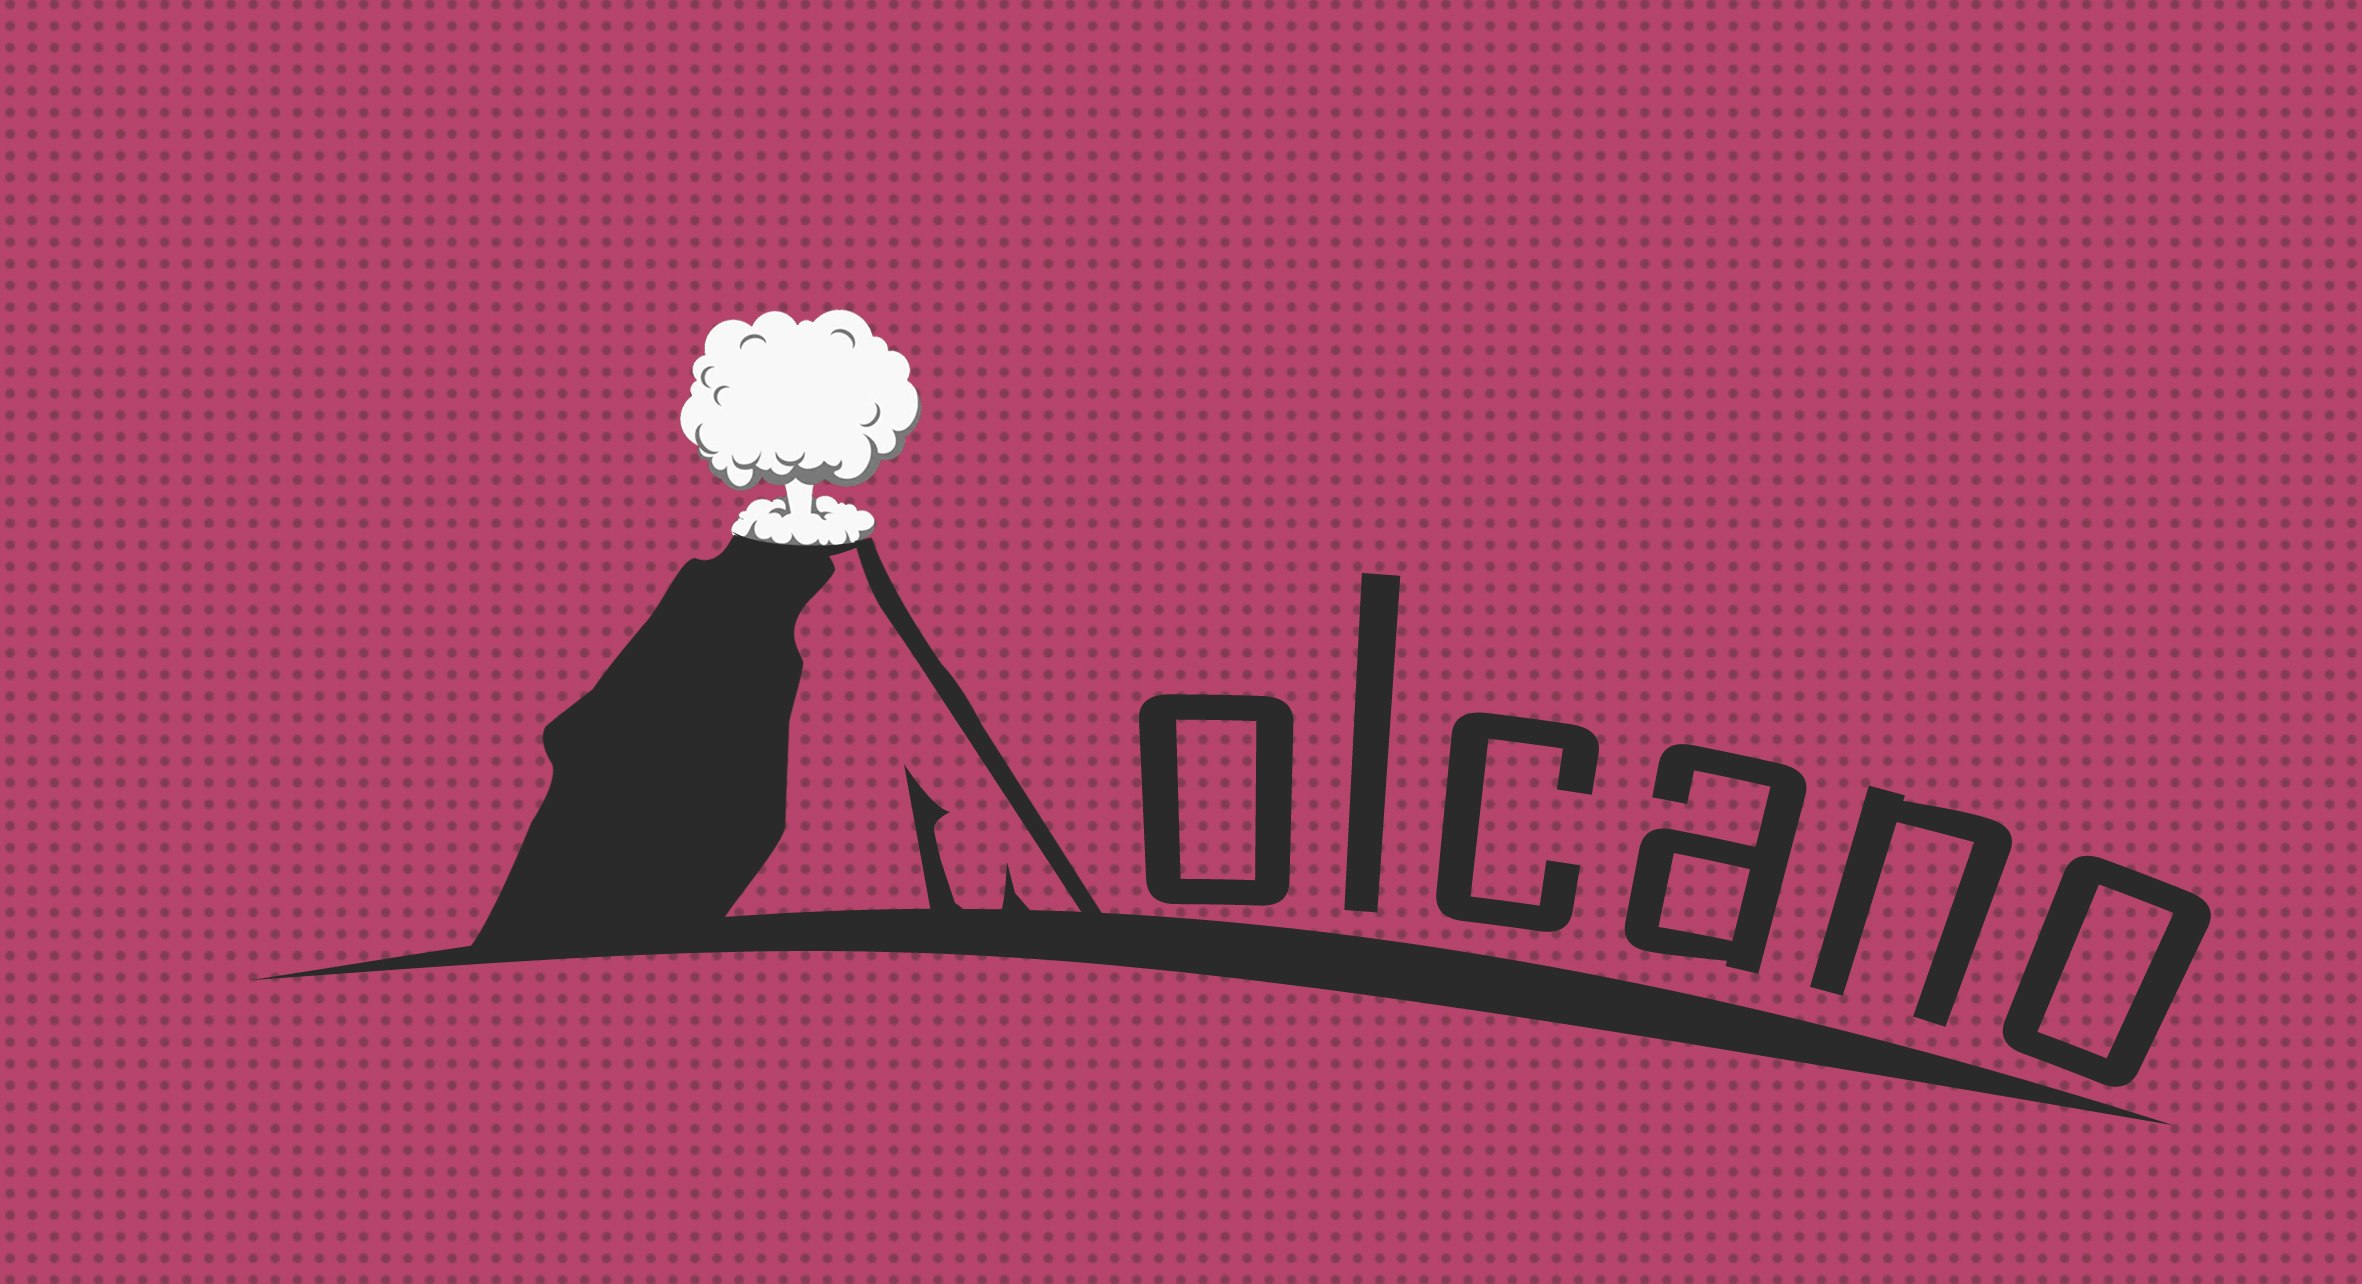 Volcano logo